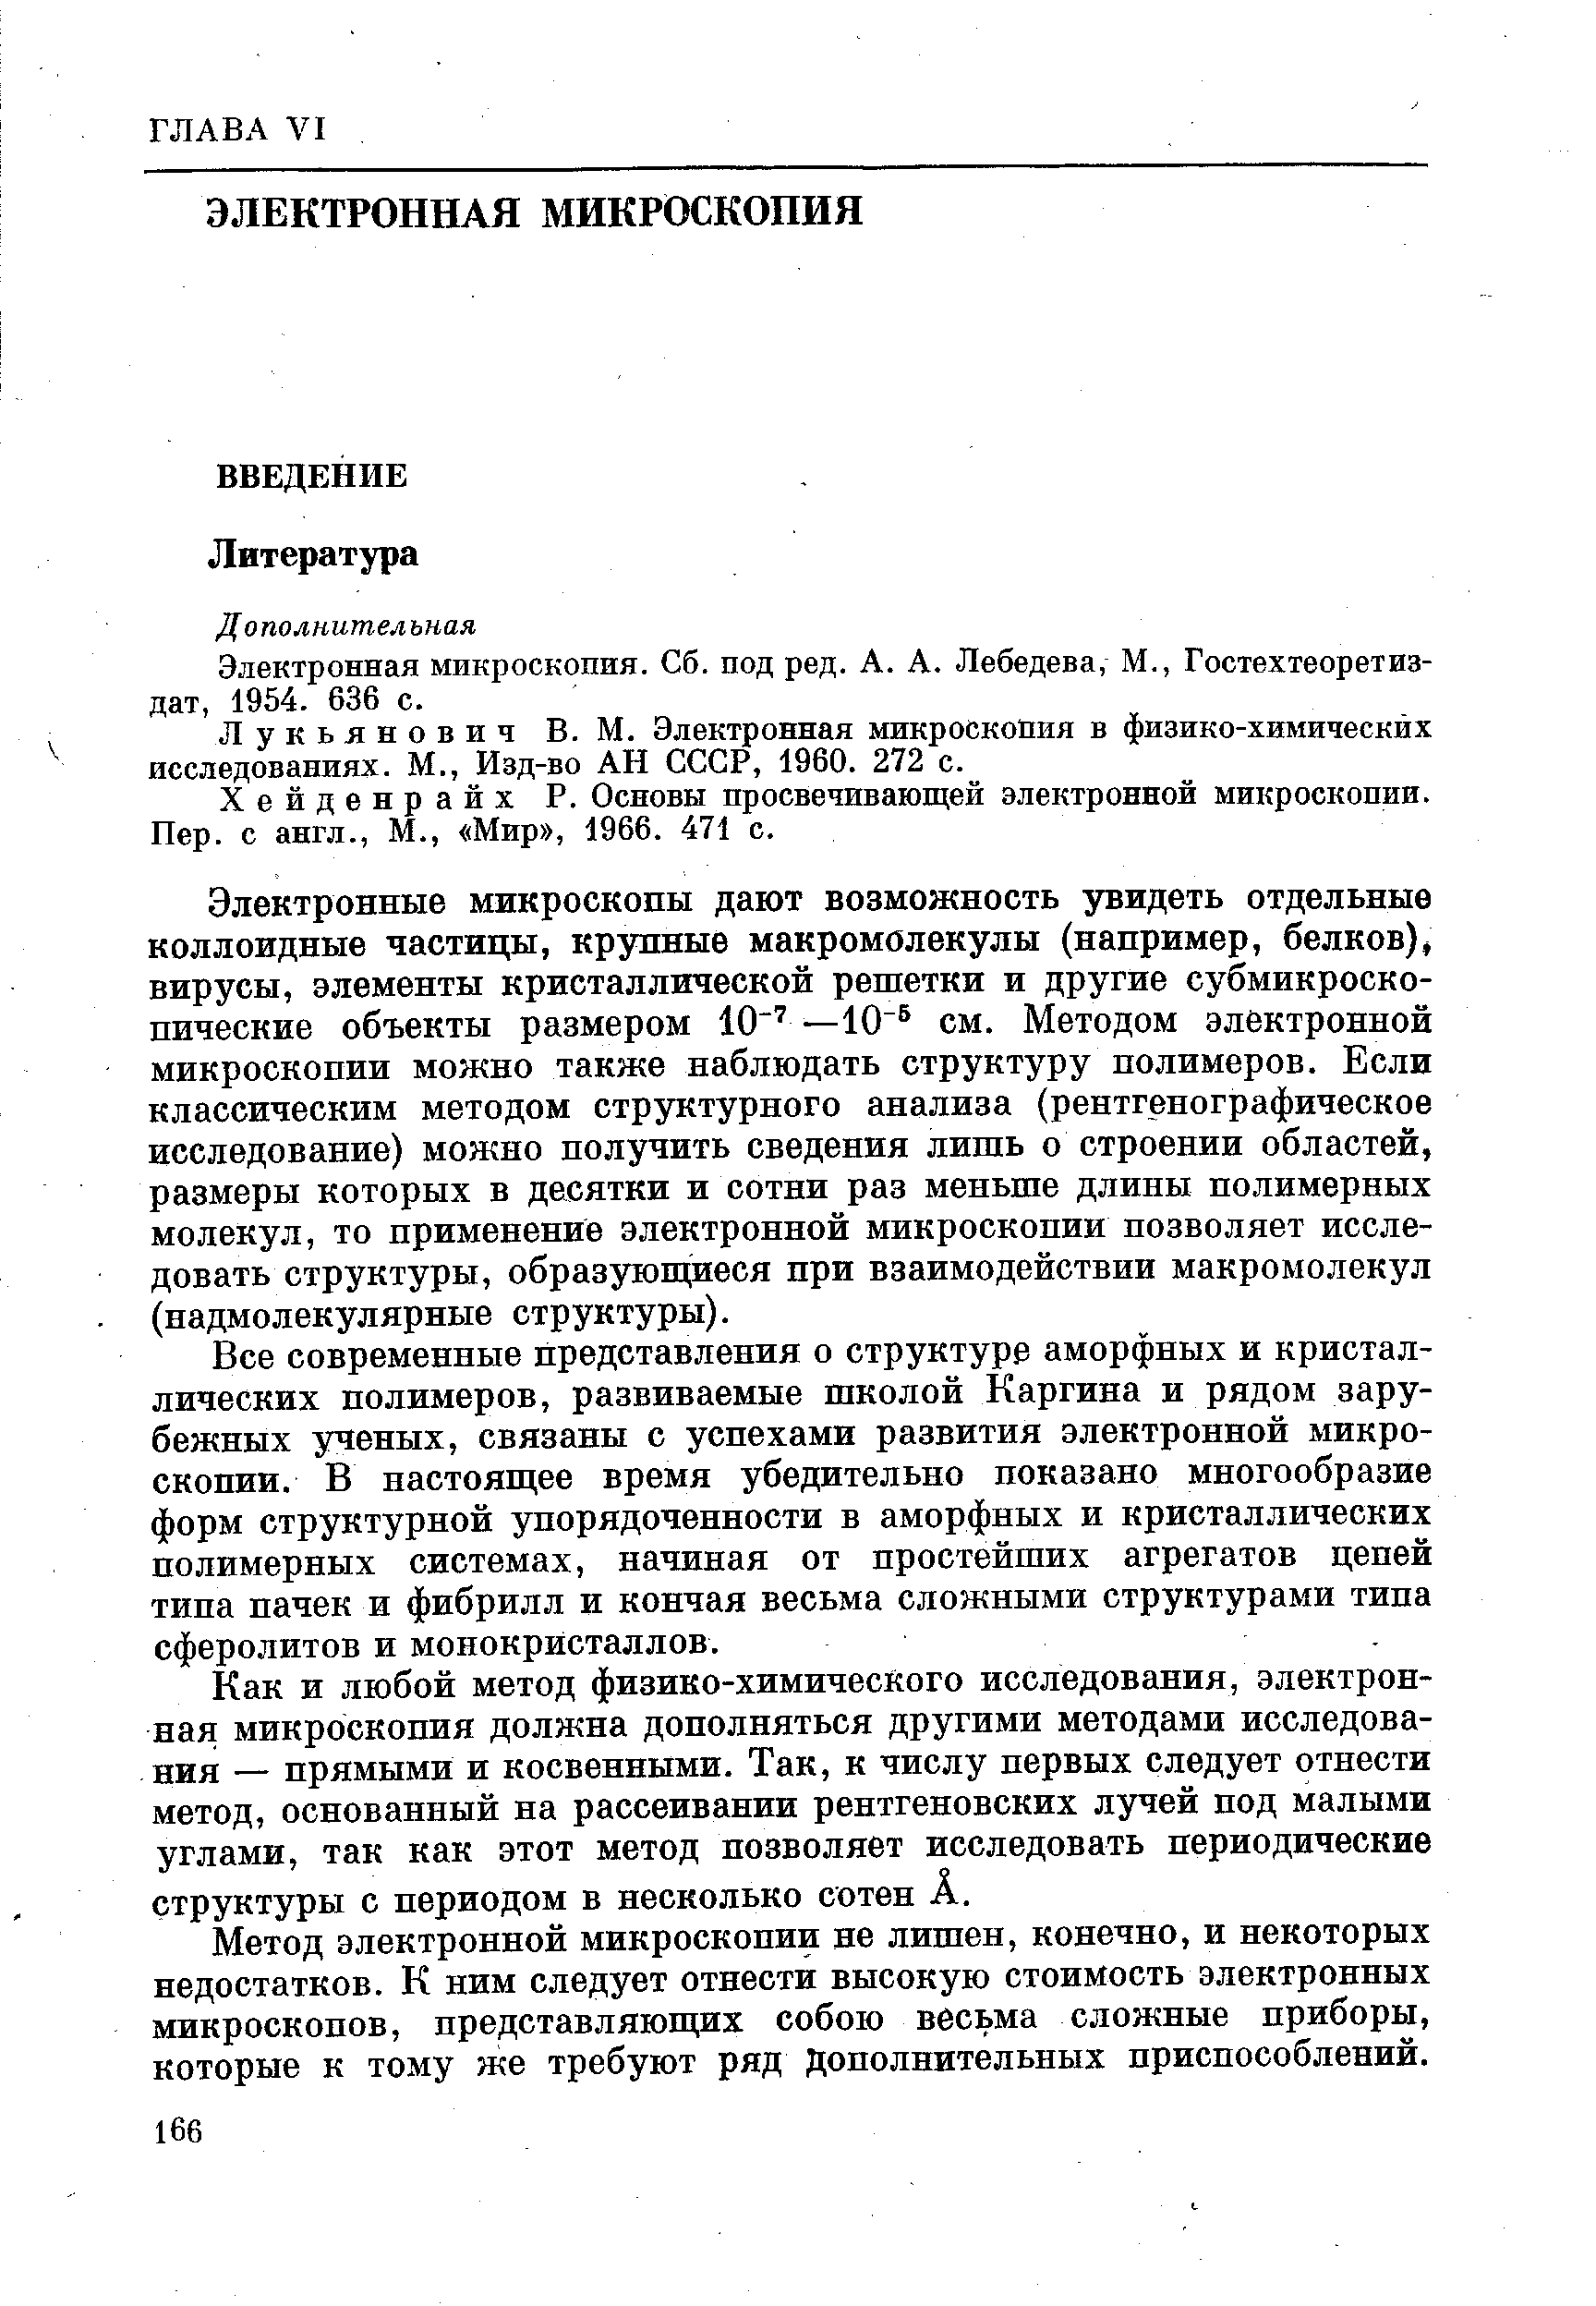 Электронная микроскопия. Сб. под ред. А. А. Лебедева, М., Гостехтеоретиздат, 1954. 636 с.